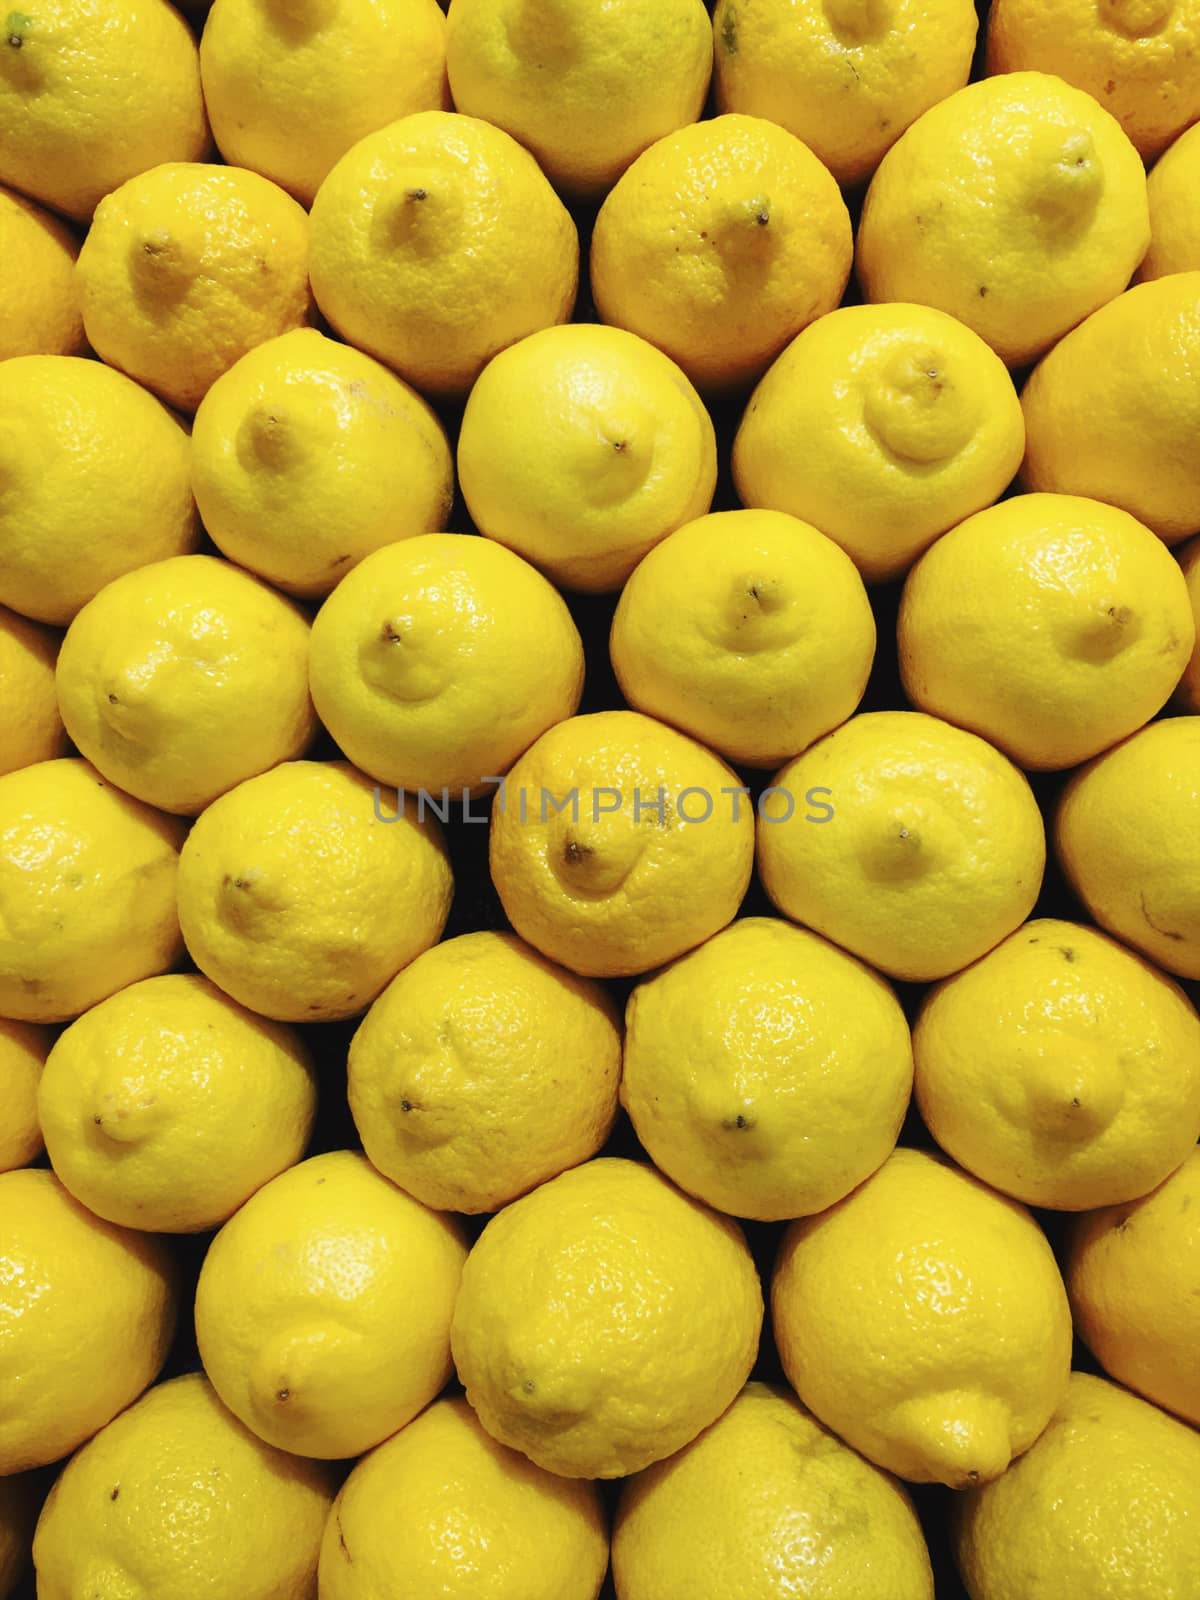 Yellow lemons in rows, displayed inside shop.